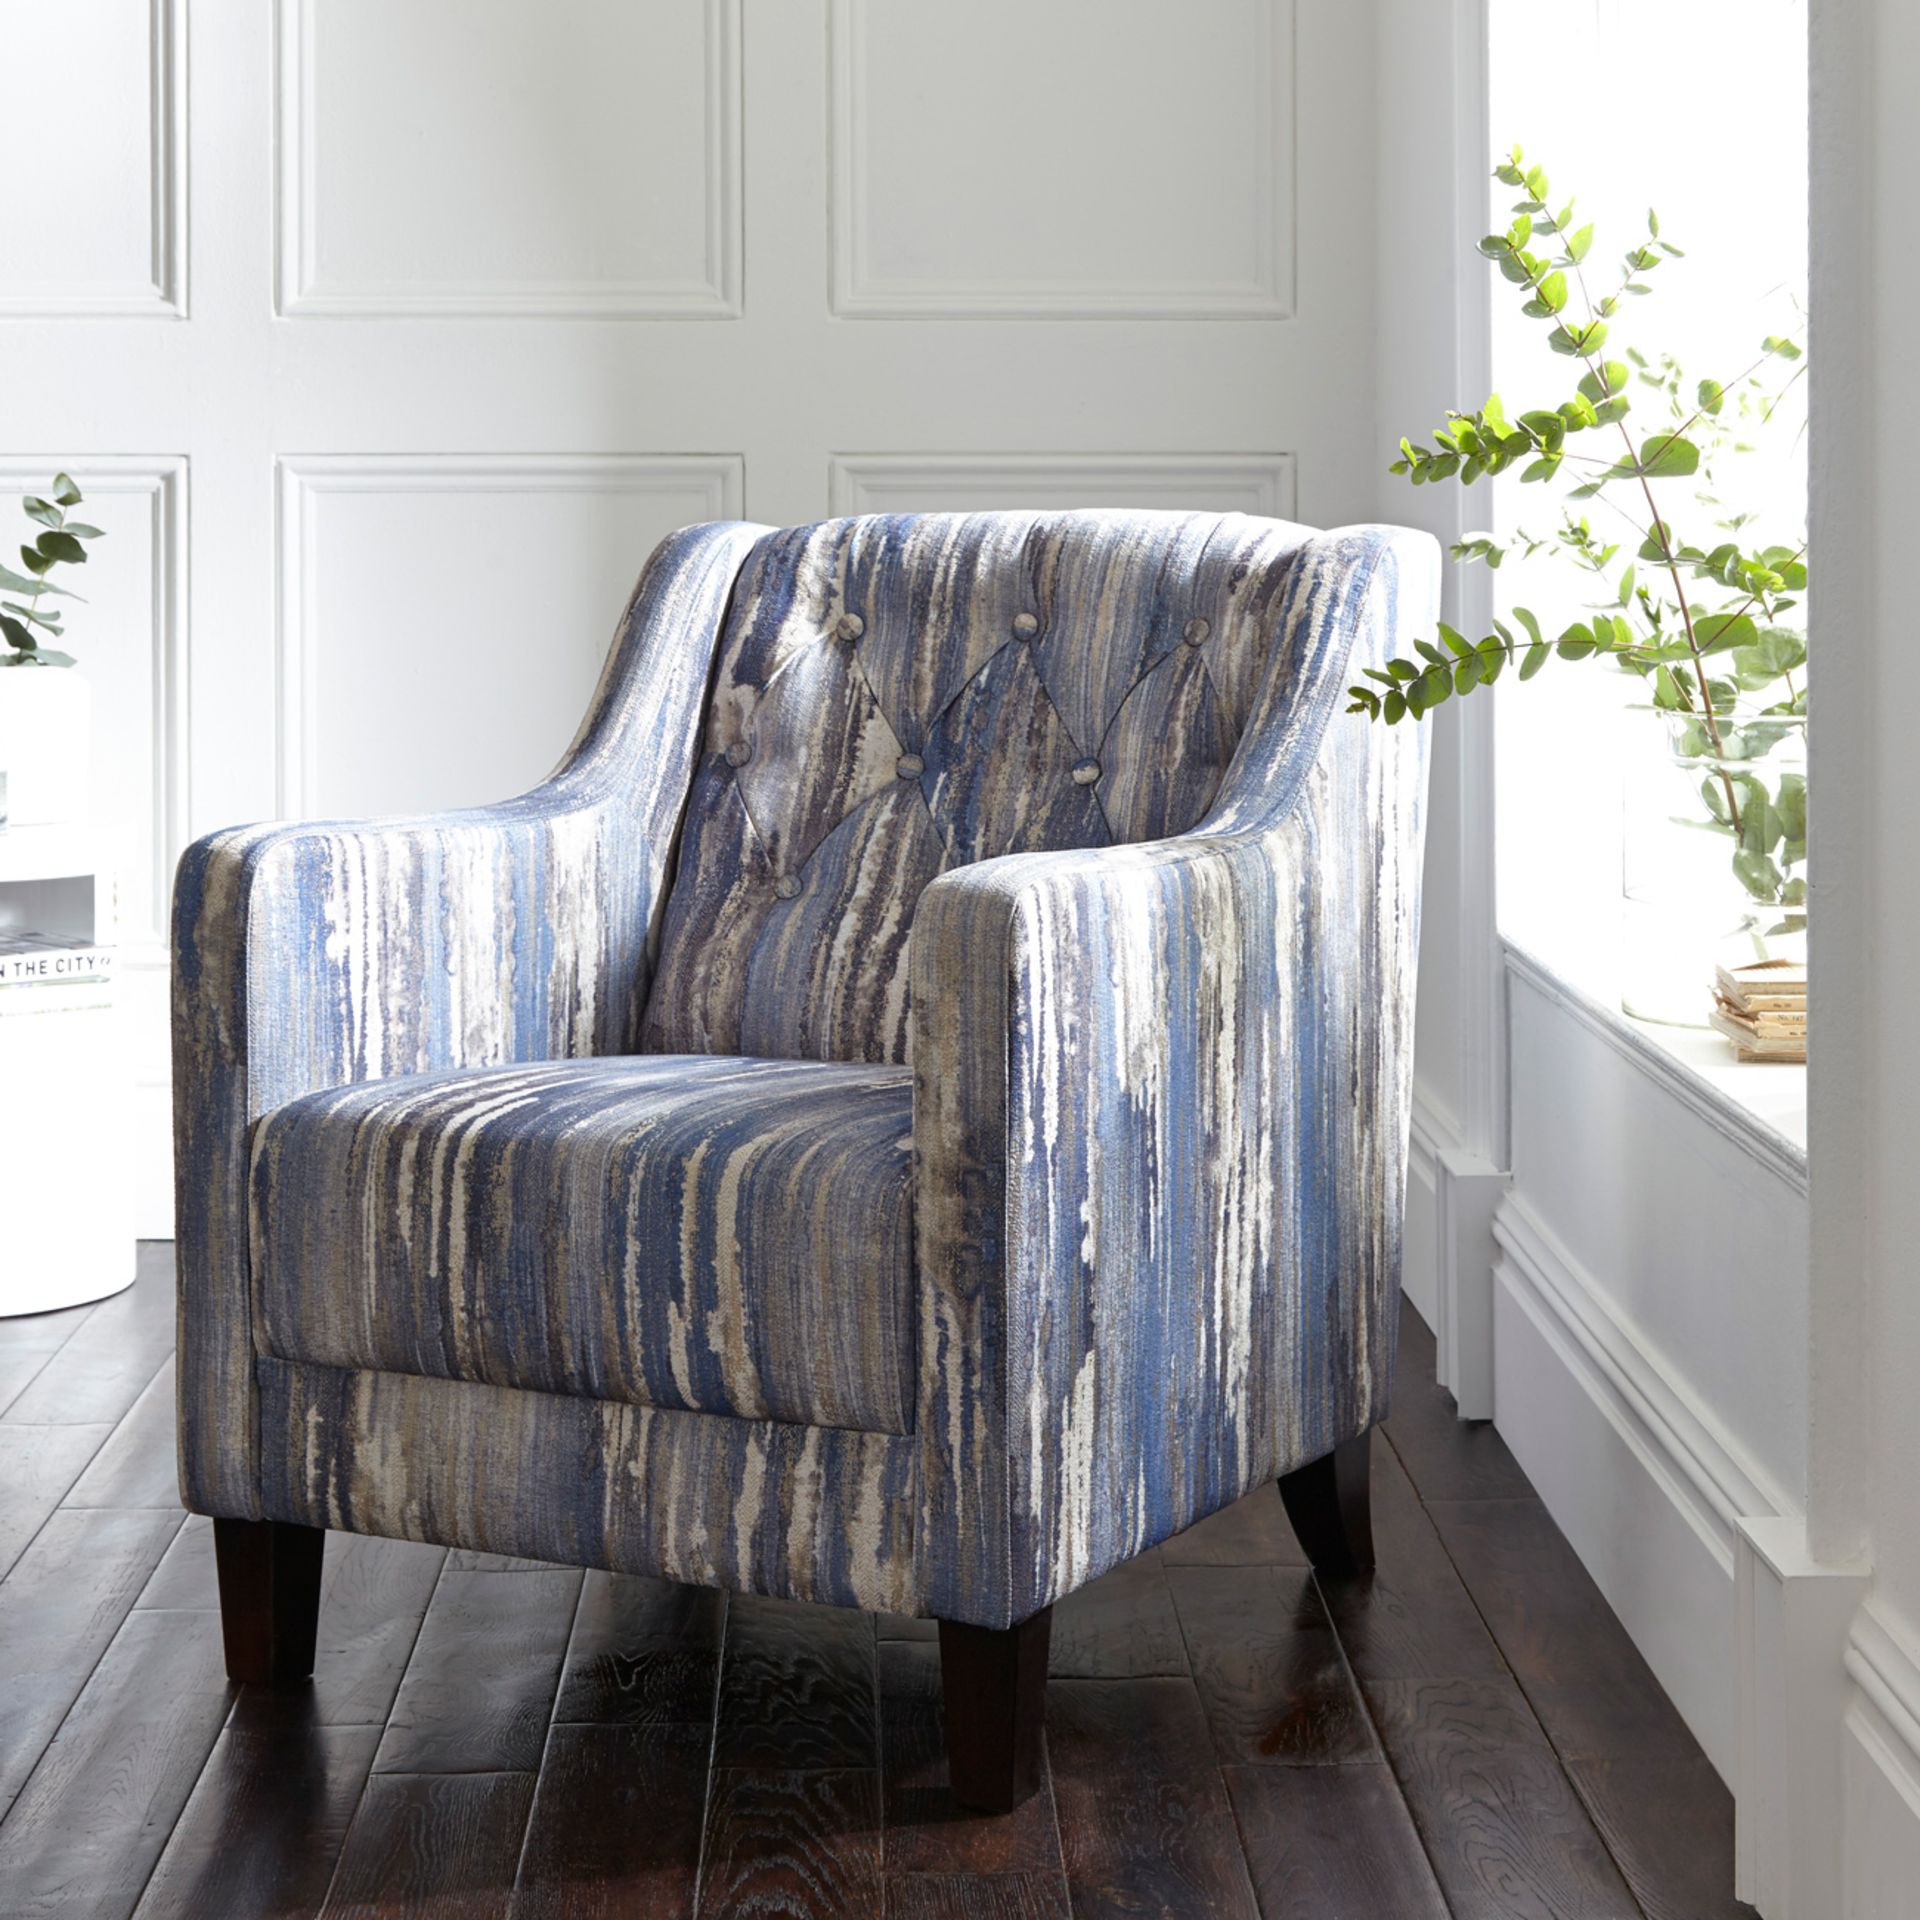 1 x Hampton Armchair by Clarke & Clarke - Latour Indigo Woven Fabric and Dark Wooden Legs - RRP £699 - Image 3 of 8